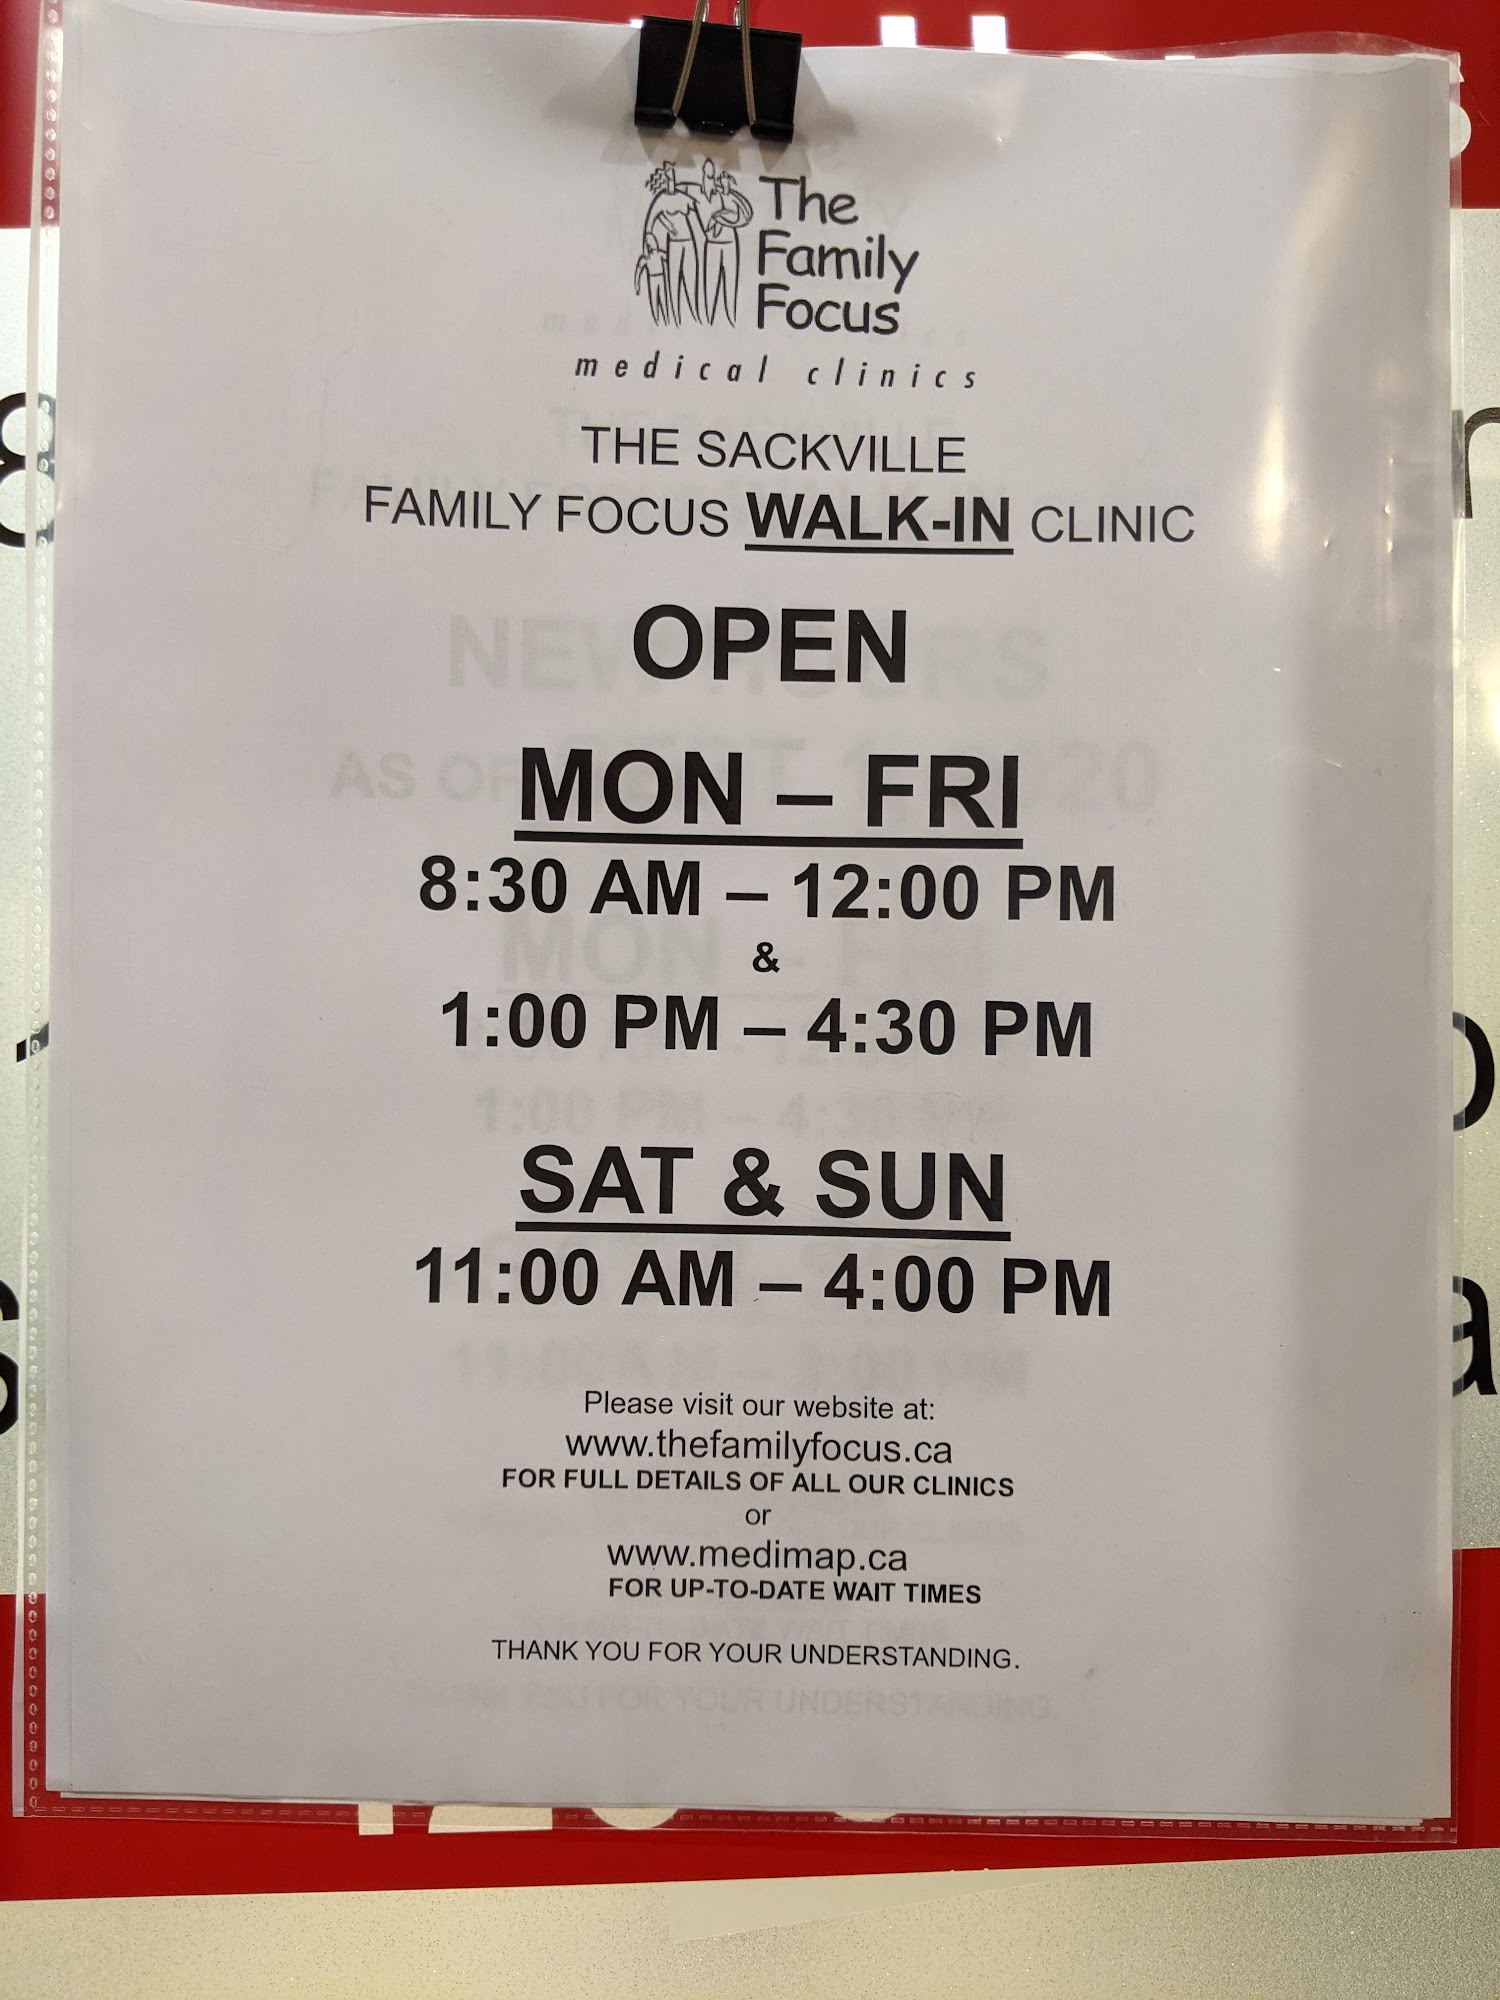 Family Focus Medical Clinics